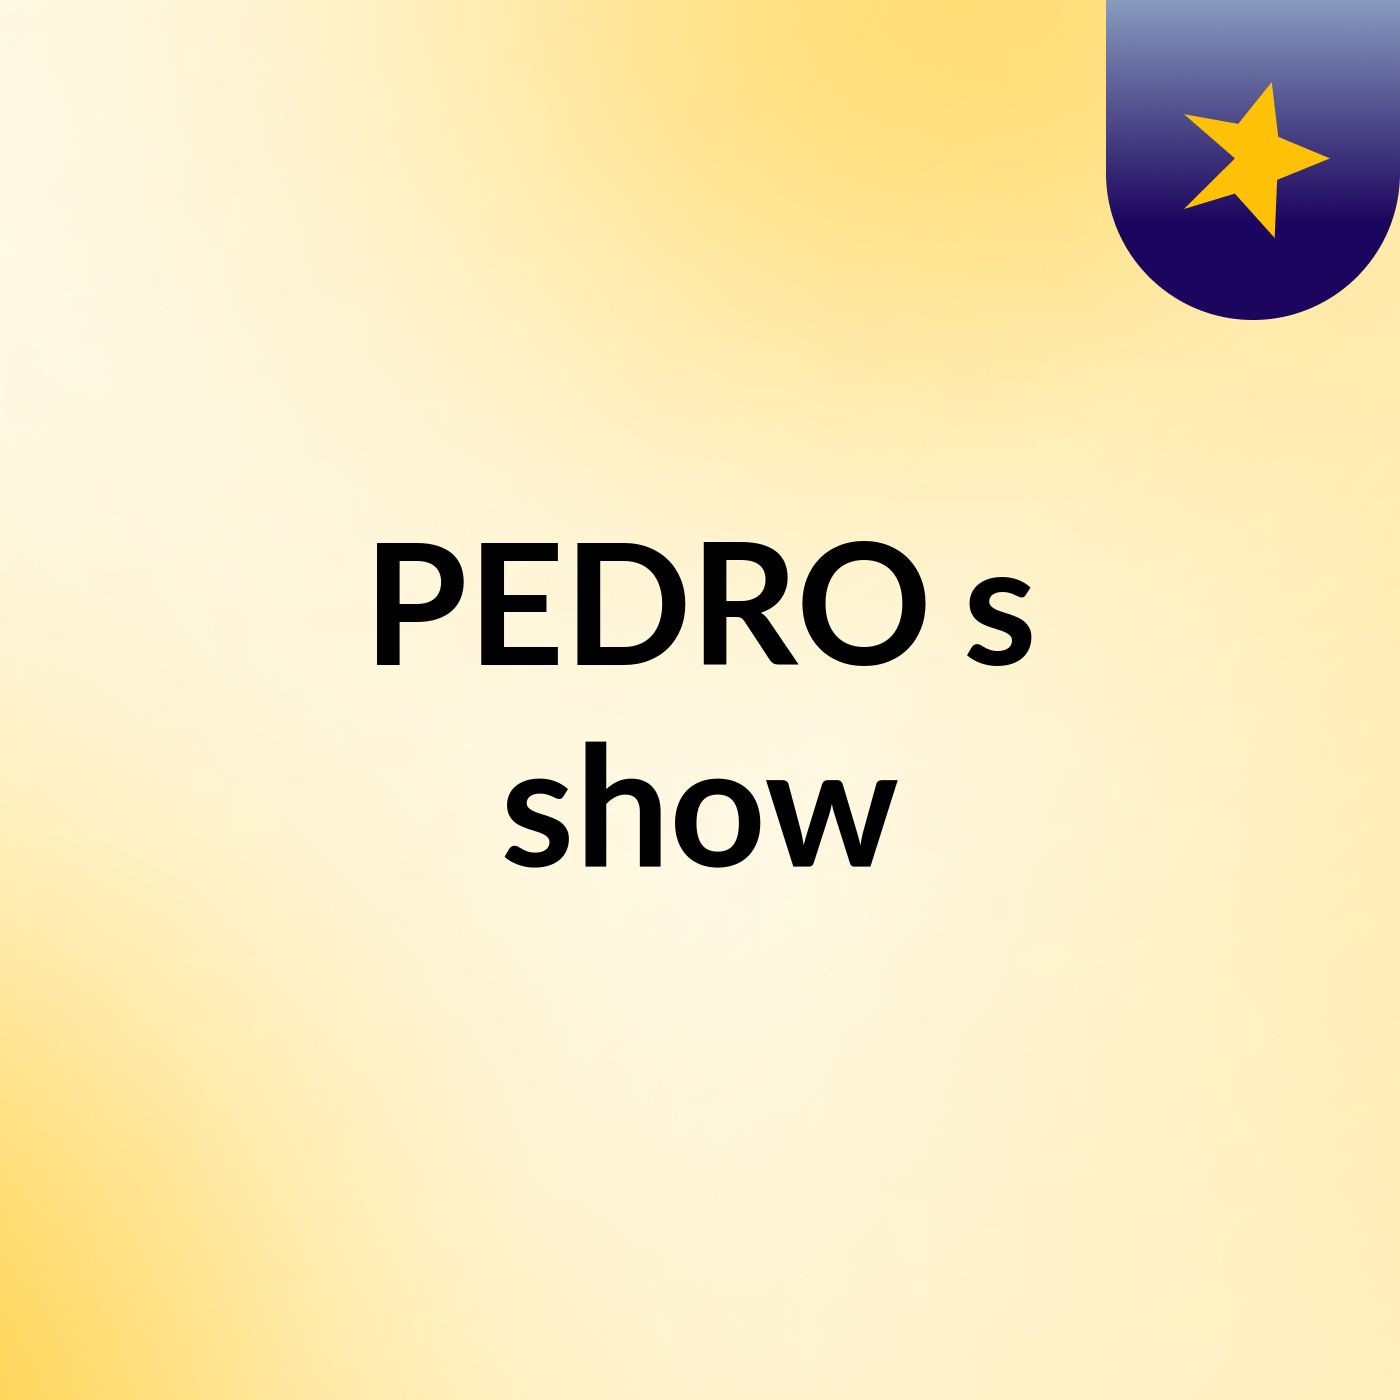 PEDRO's show